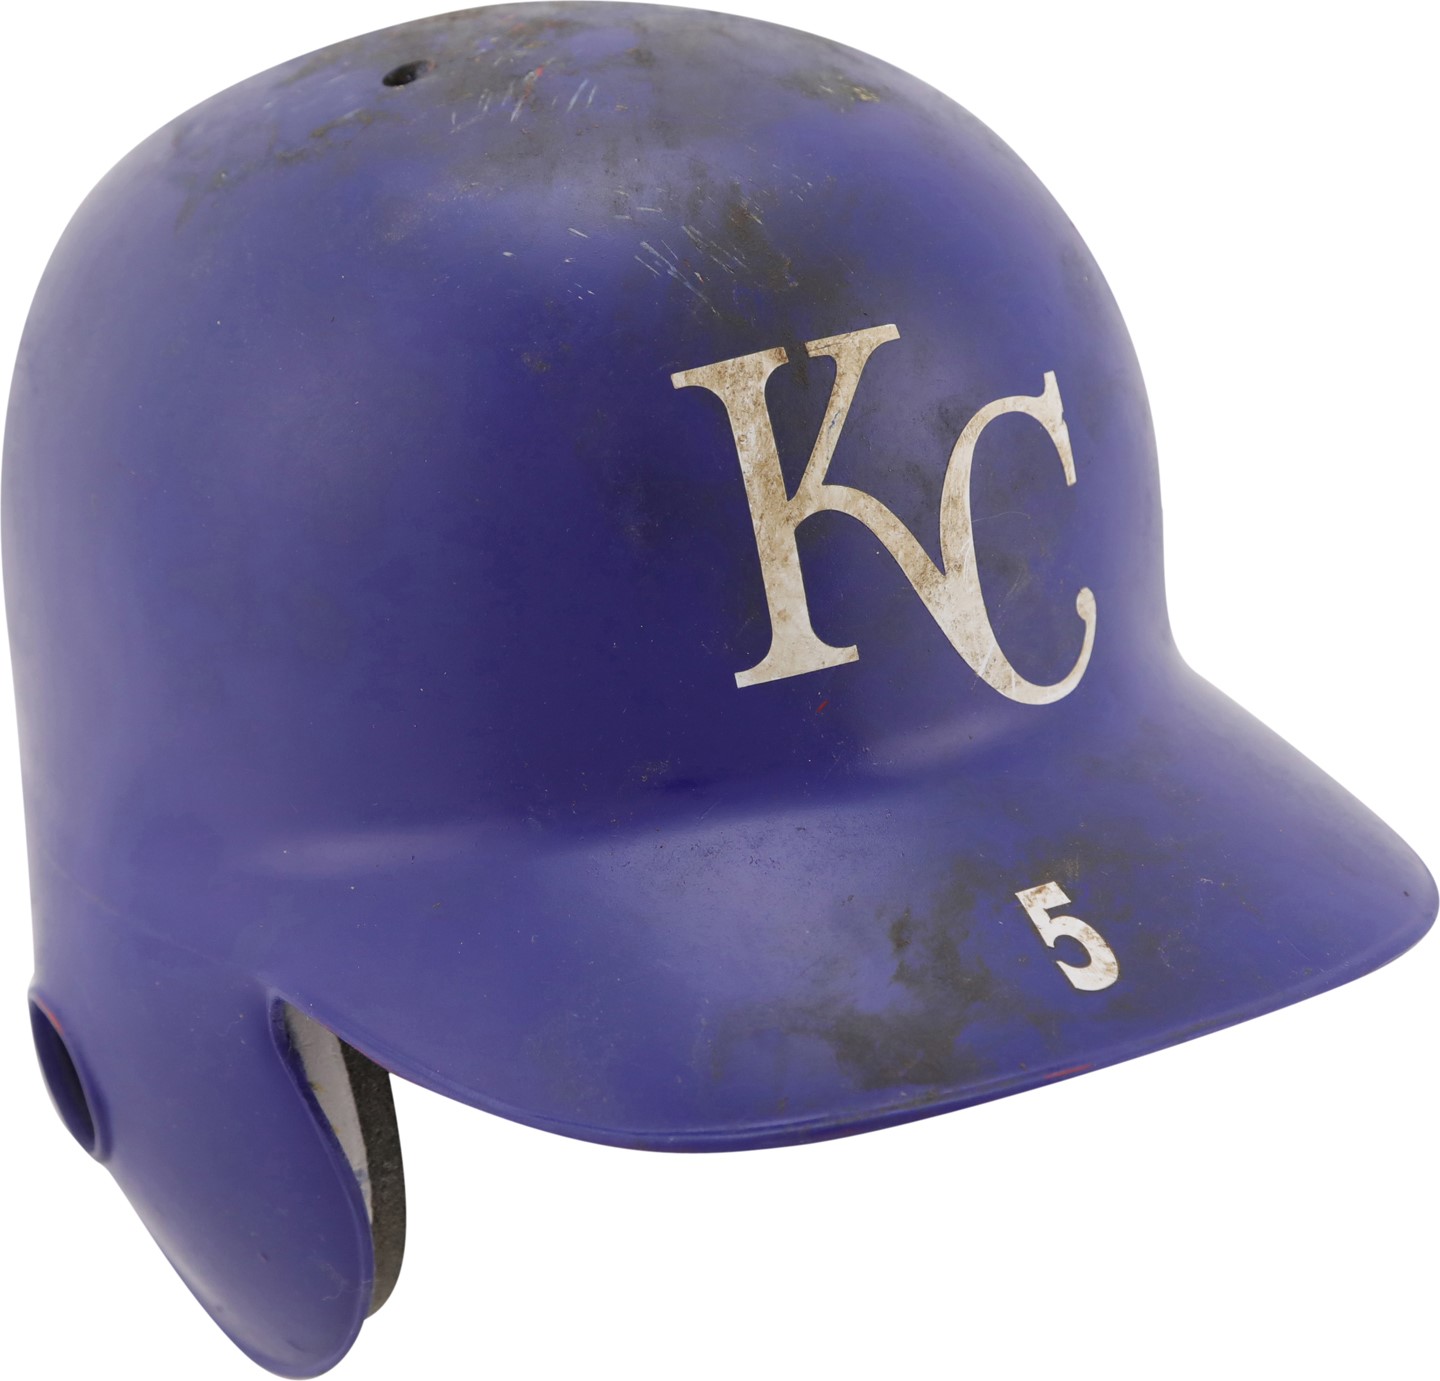 - Circa 1990 George Brett Kansas City Royals Game Worn Helmet